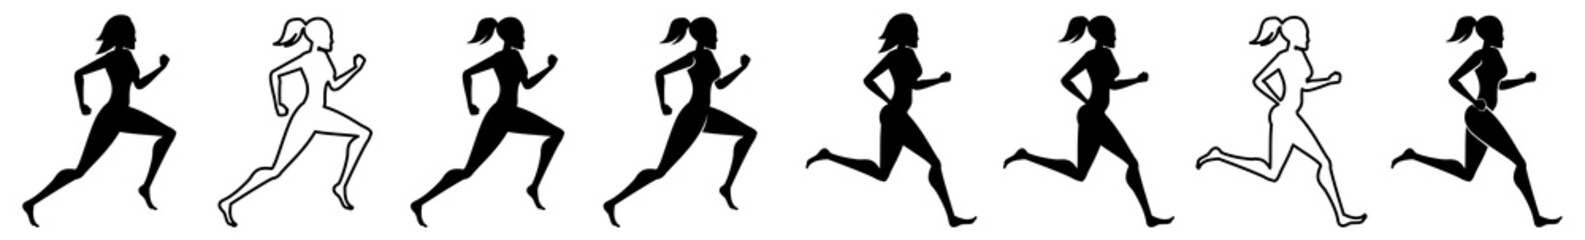 Runner Icon Female Runner Silhouette Set | Runners Icon Running Woman Vector Illustration Logo | Marathon Runner Icon Athlete Runner Isolated Collection